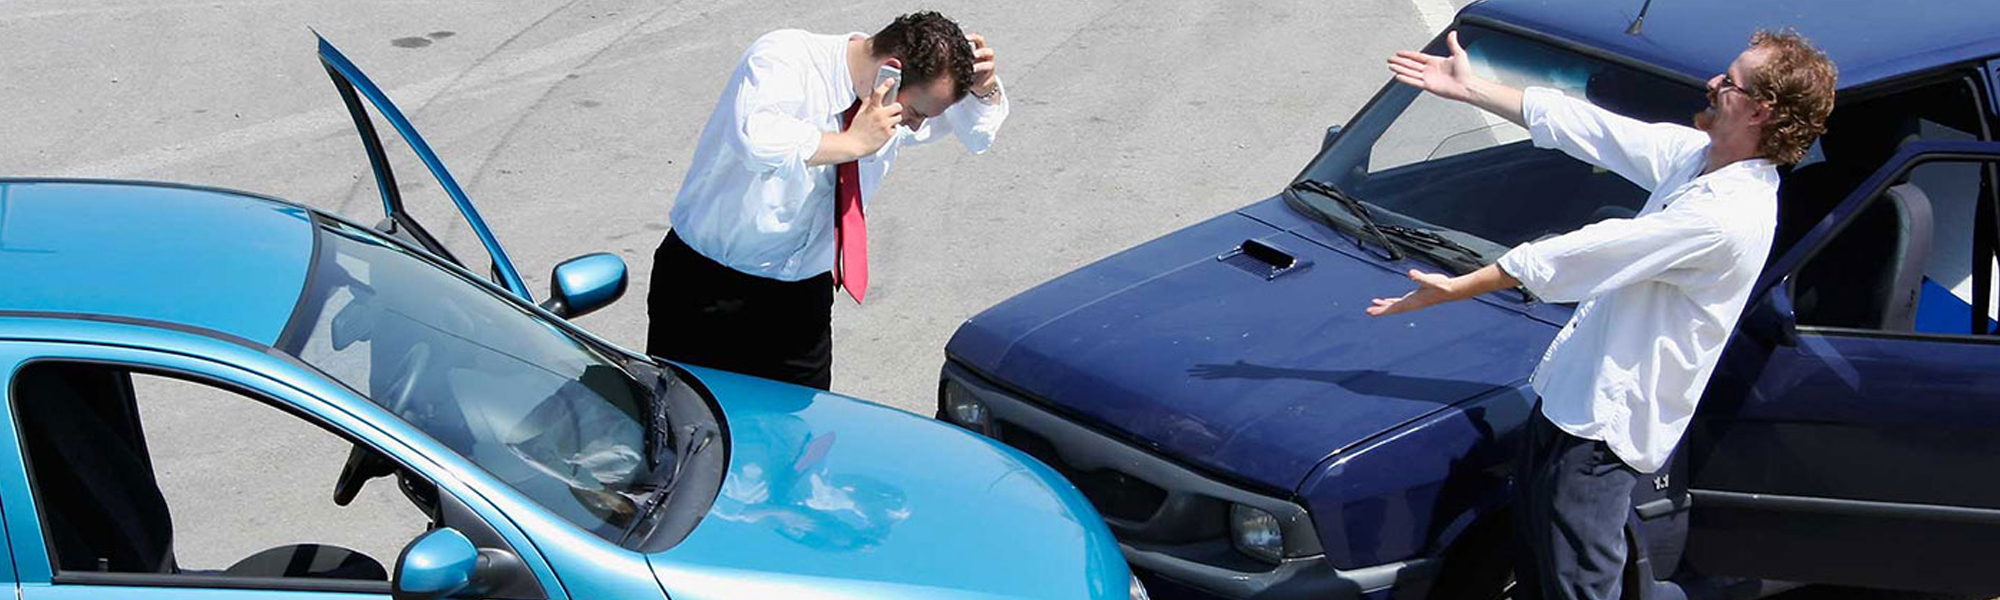 Alabama Auto with Auto Insurance Coverage